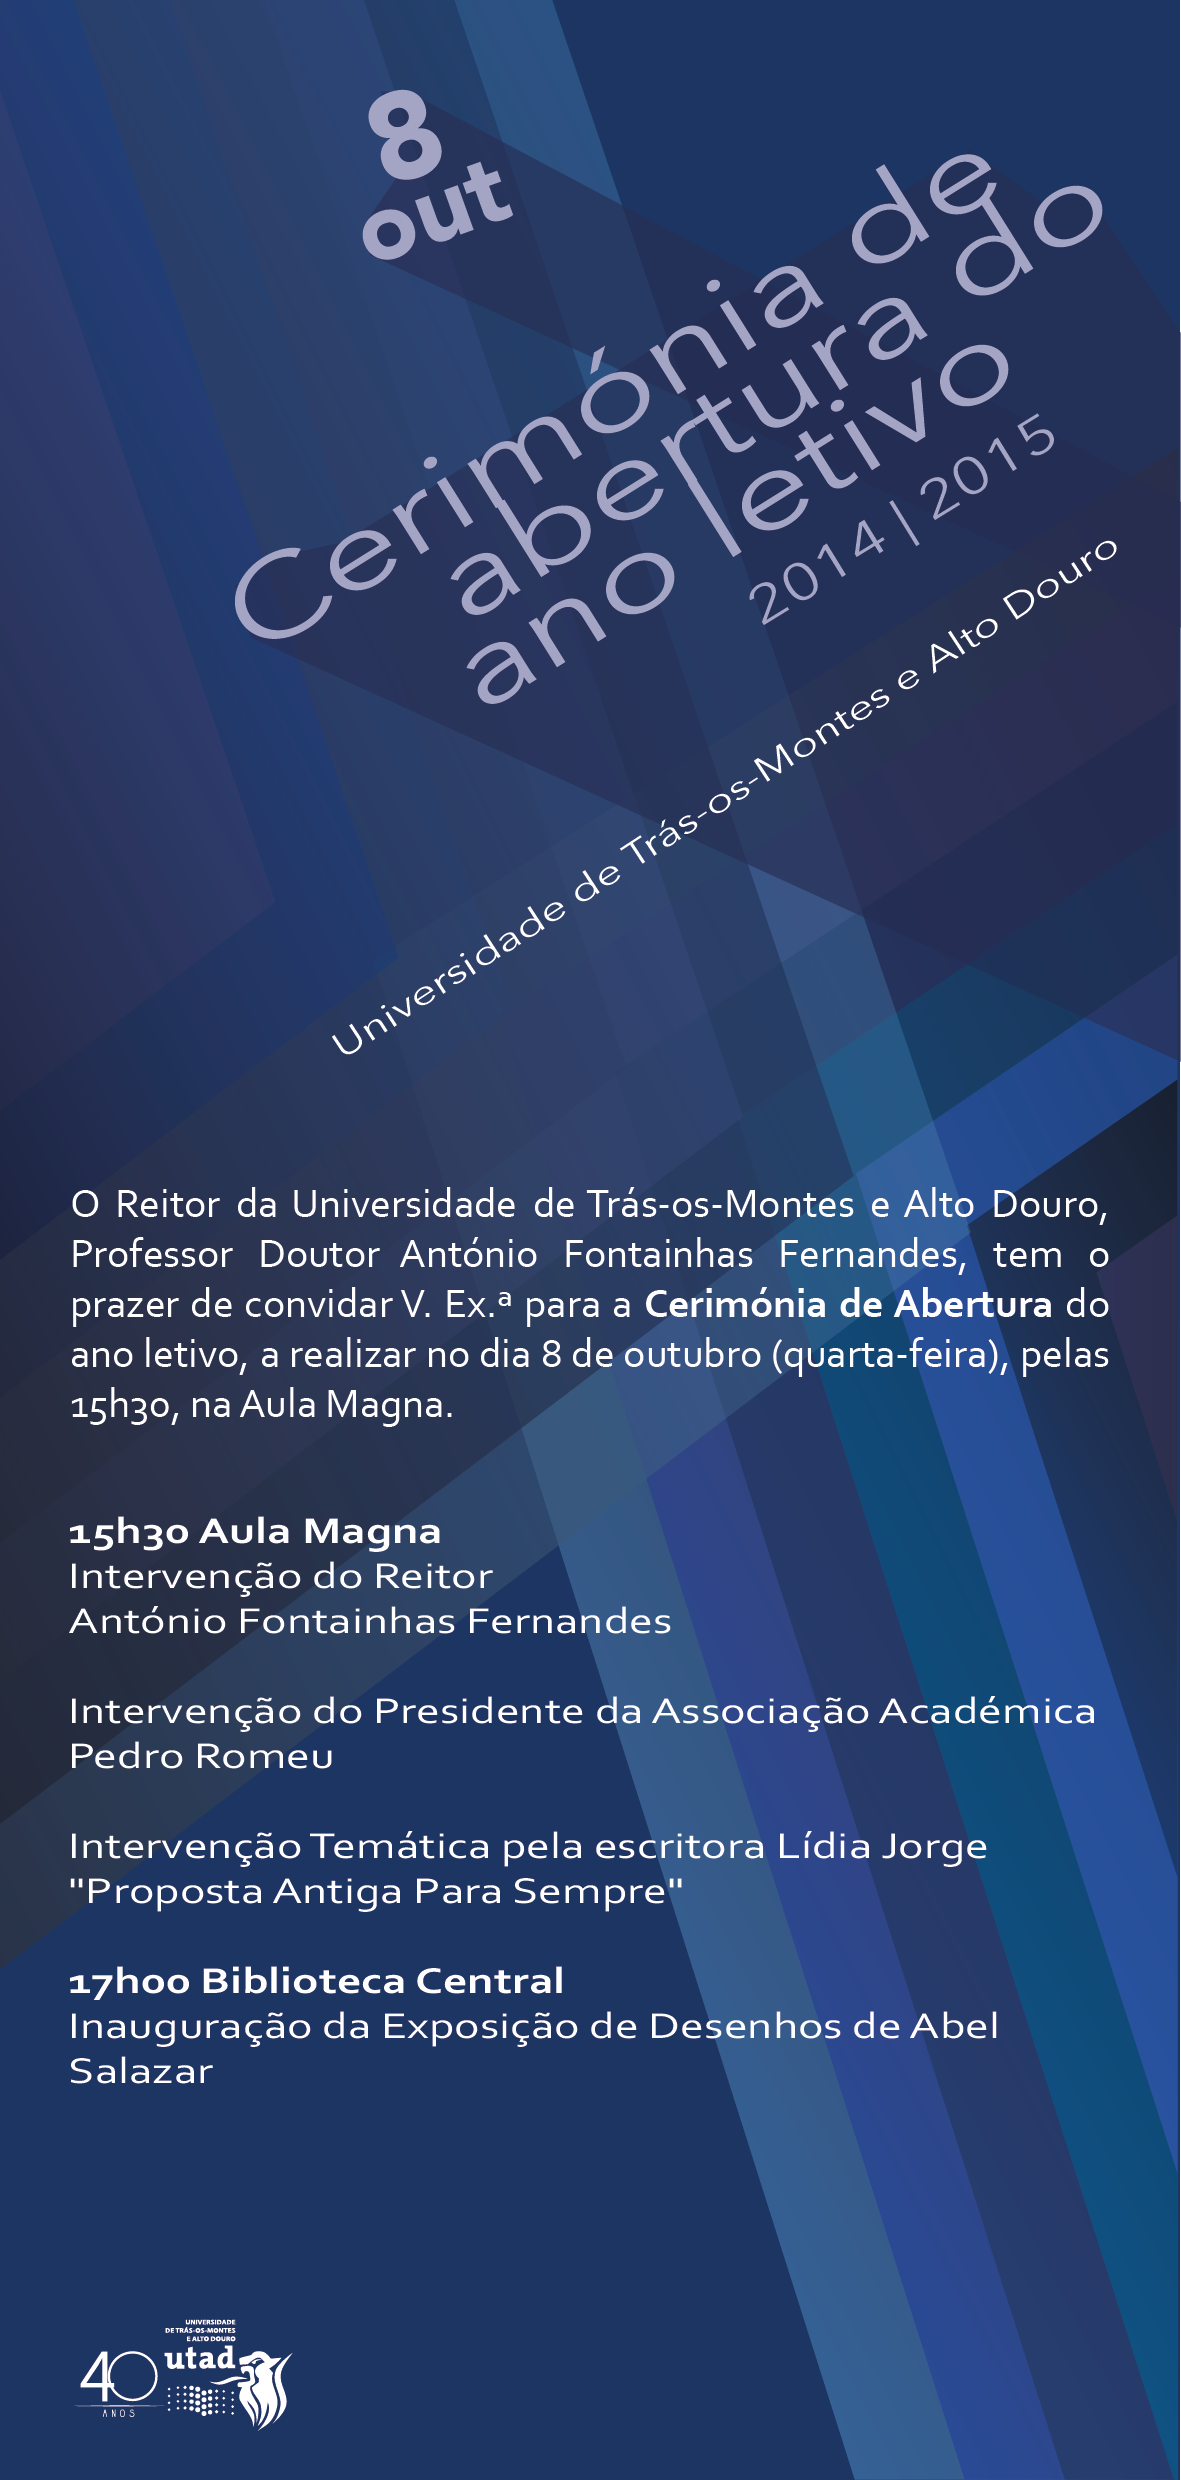 Convite: Cerimónia de Abertura do ano letivo 2014/2015